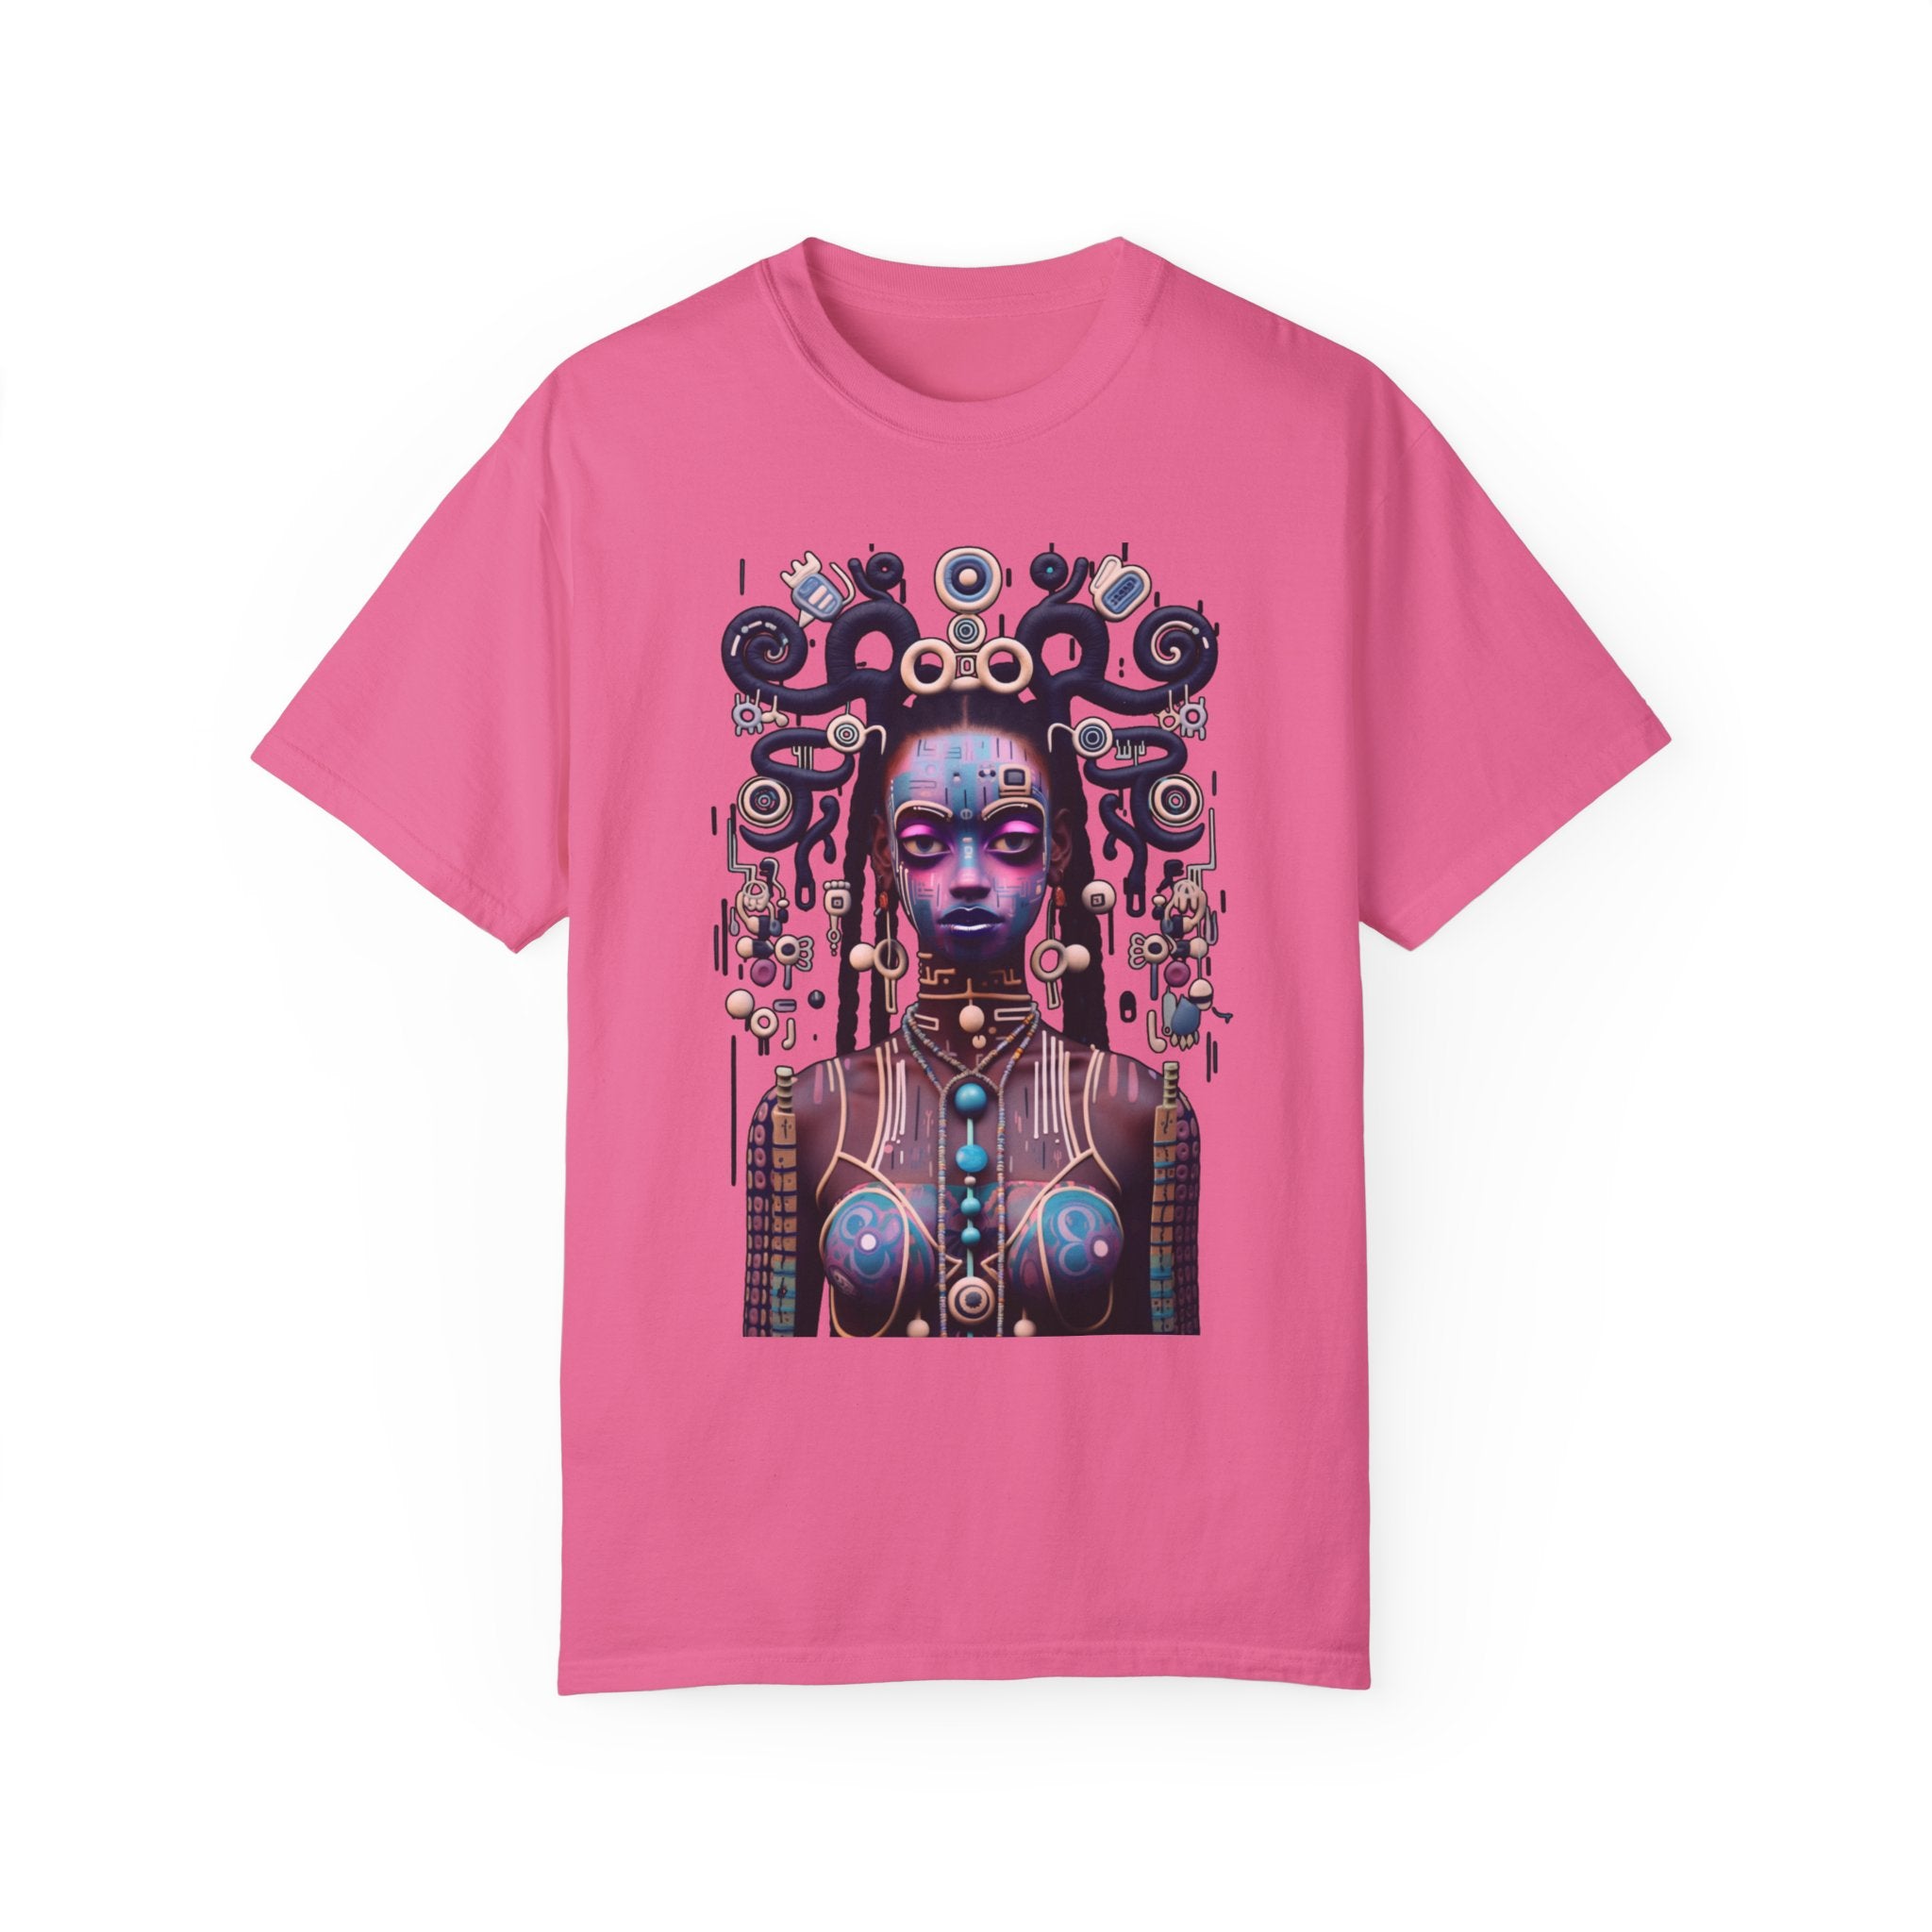 Celestial Garment-Dyed T-shirt